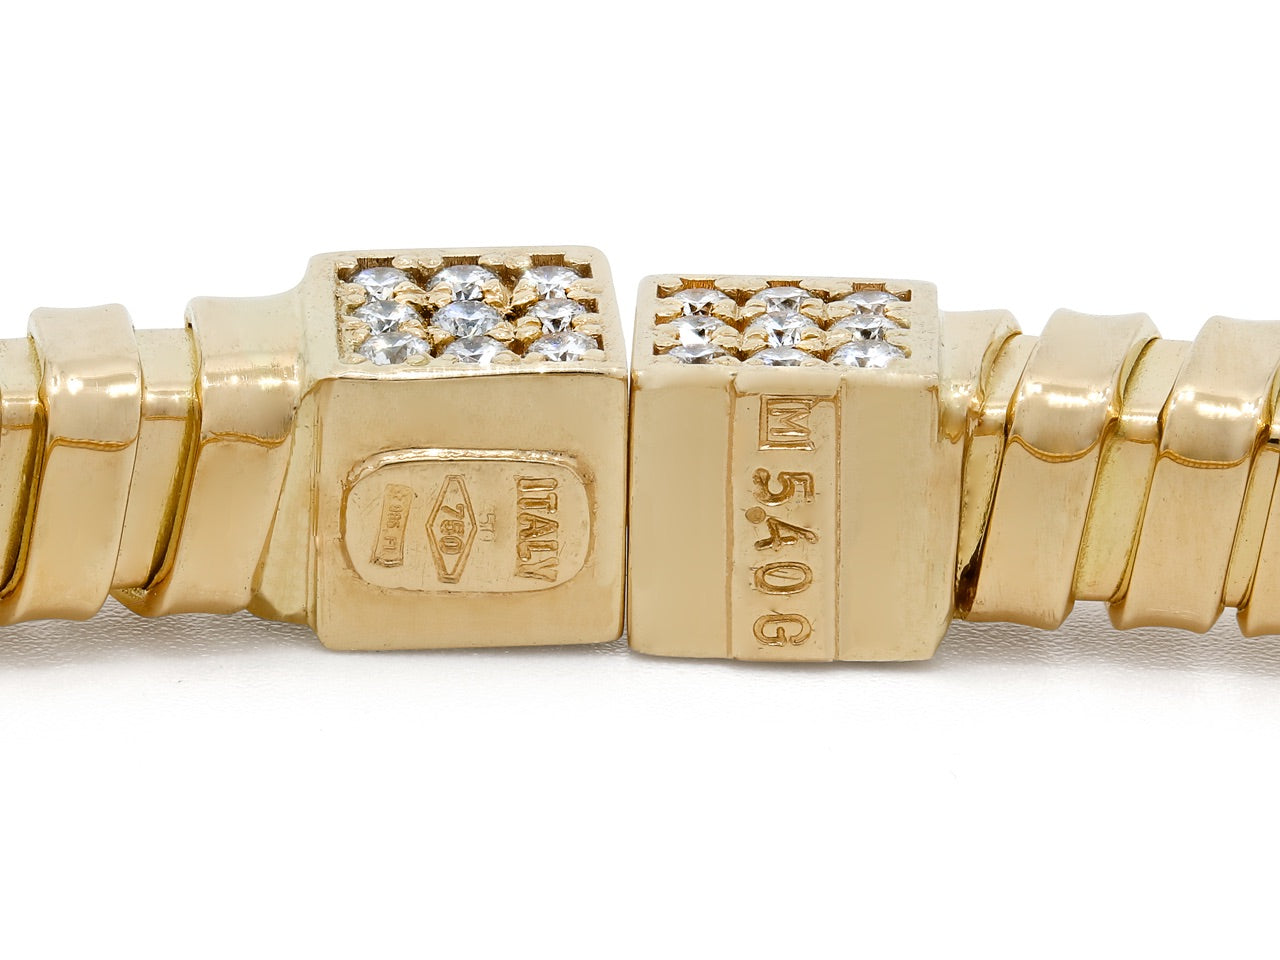 Diamond Tubogas Bracelet in 18K Gold, by Beladora